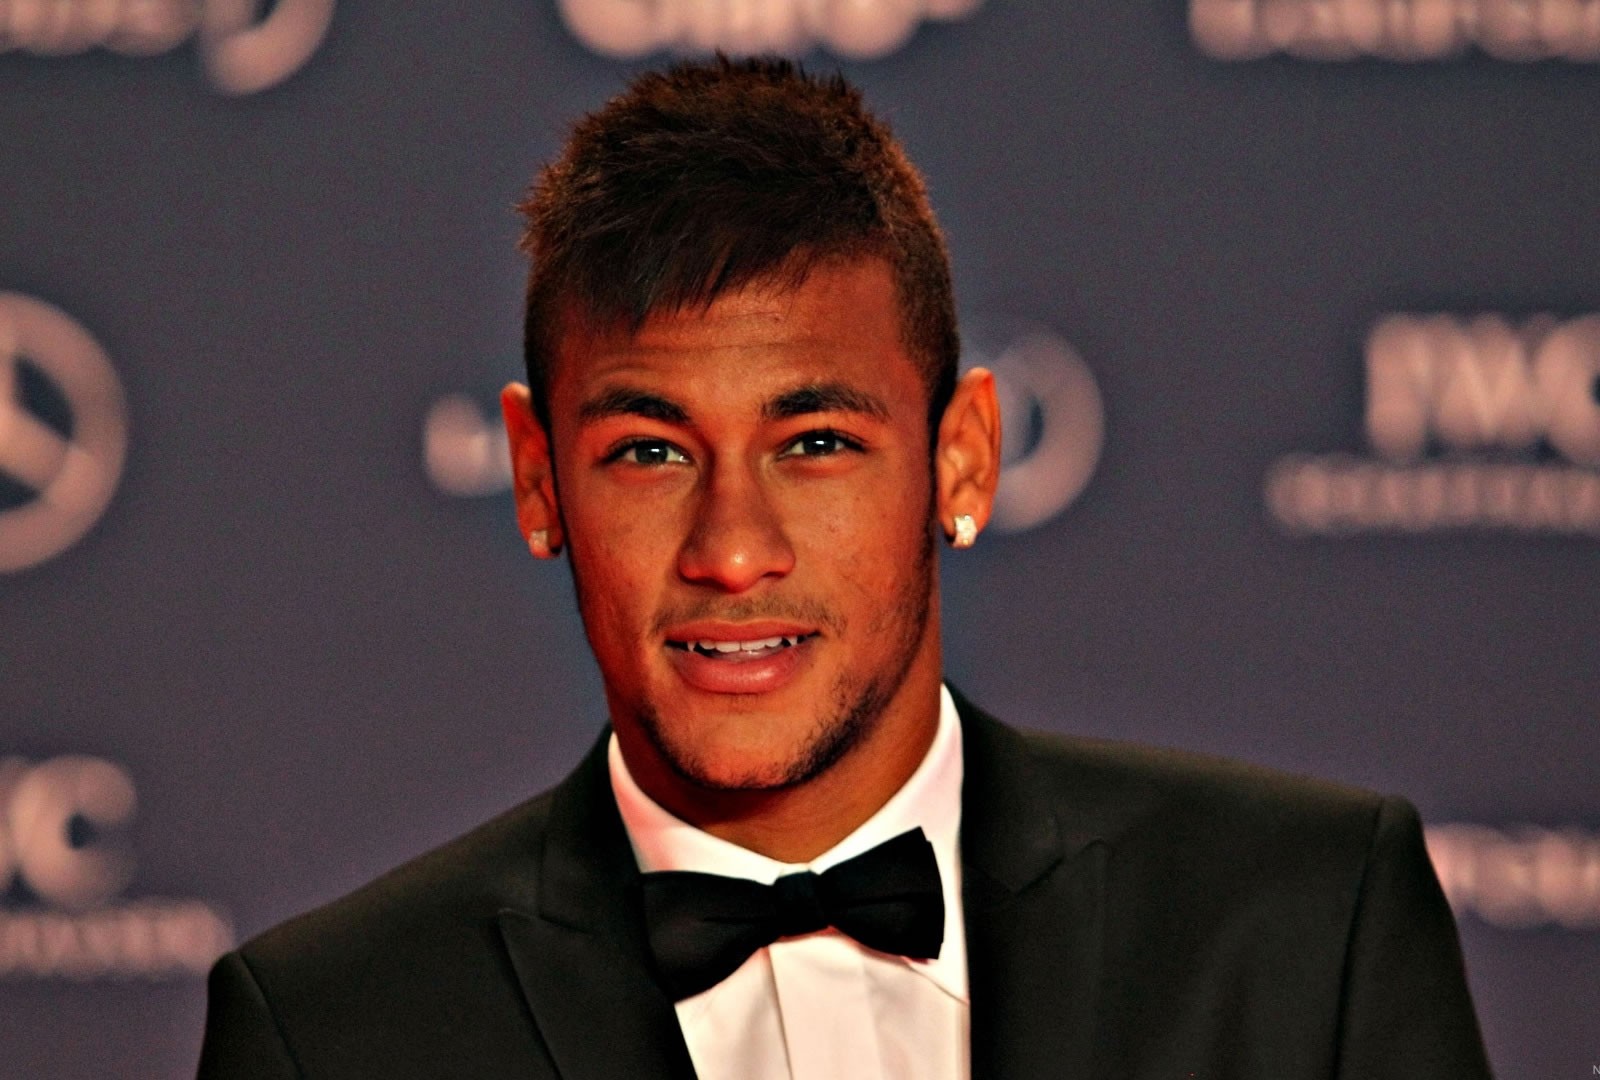 Neymar in tuxedo wallpaper - Neymar Wallpapers